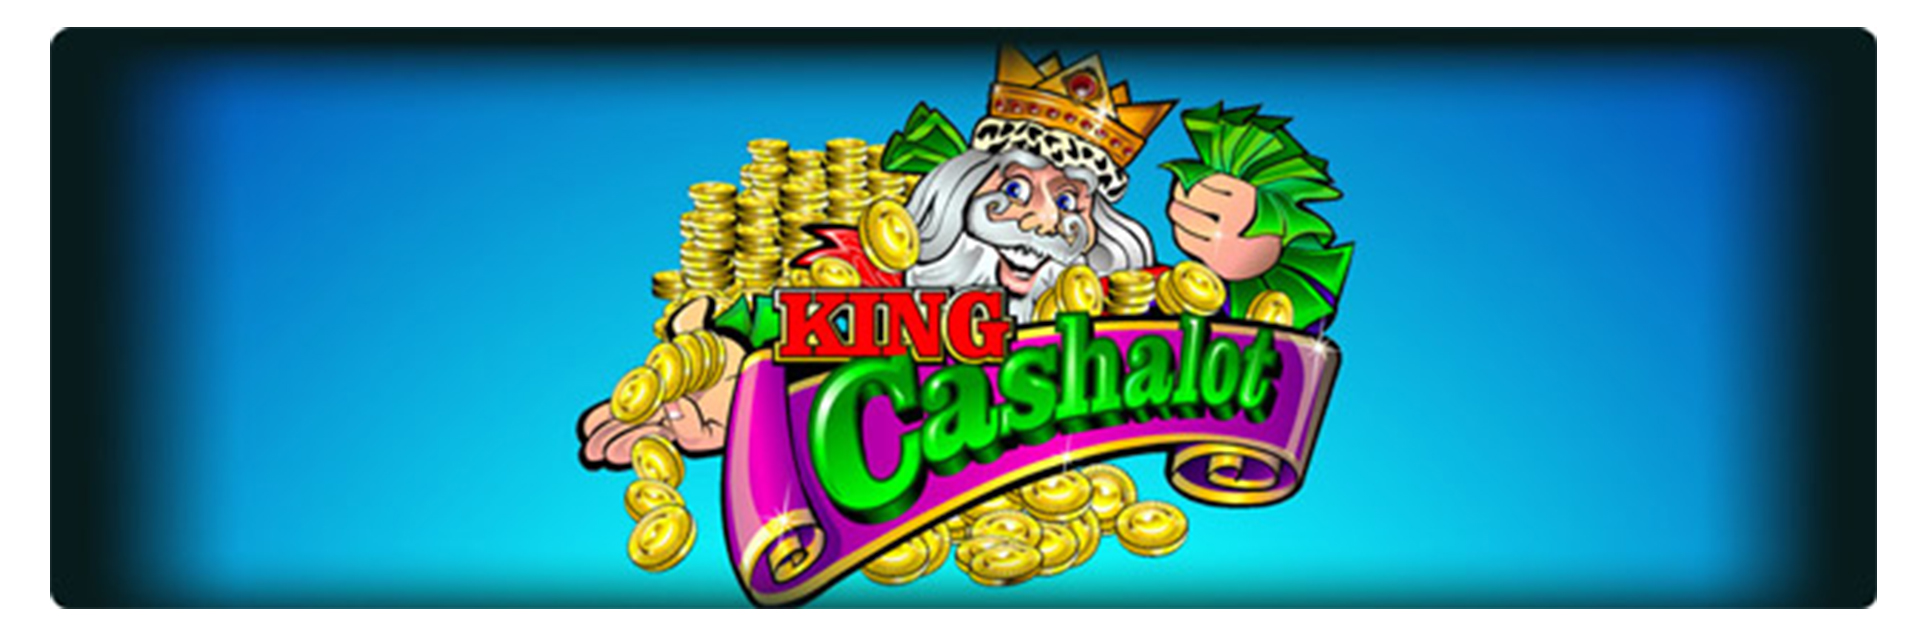 King Cashalot slot machines.